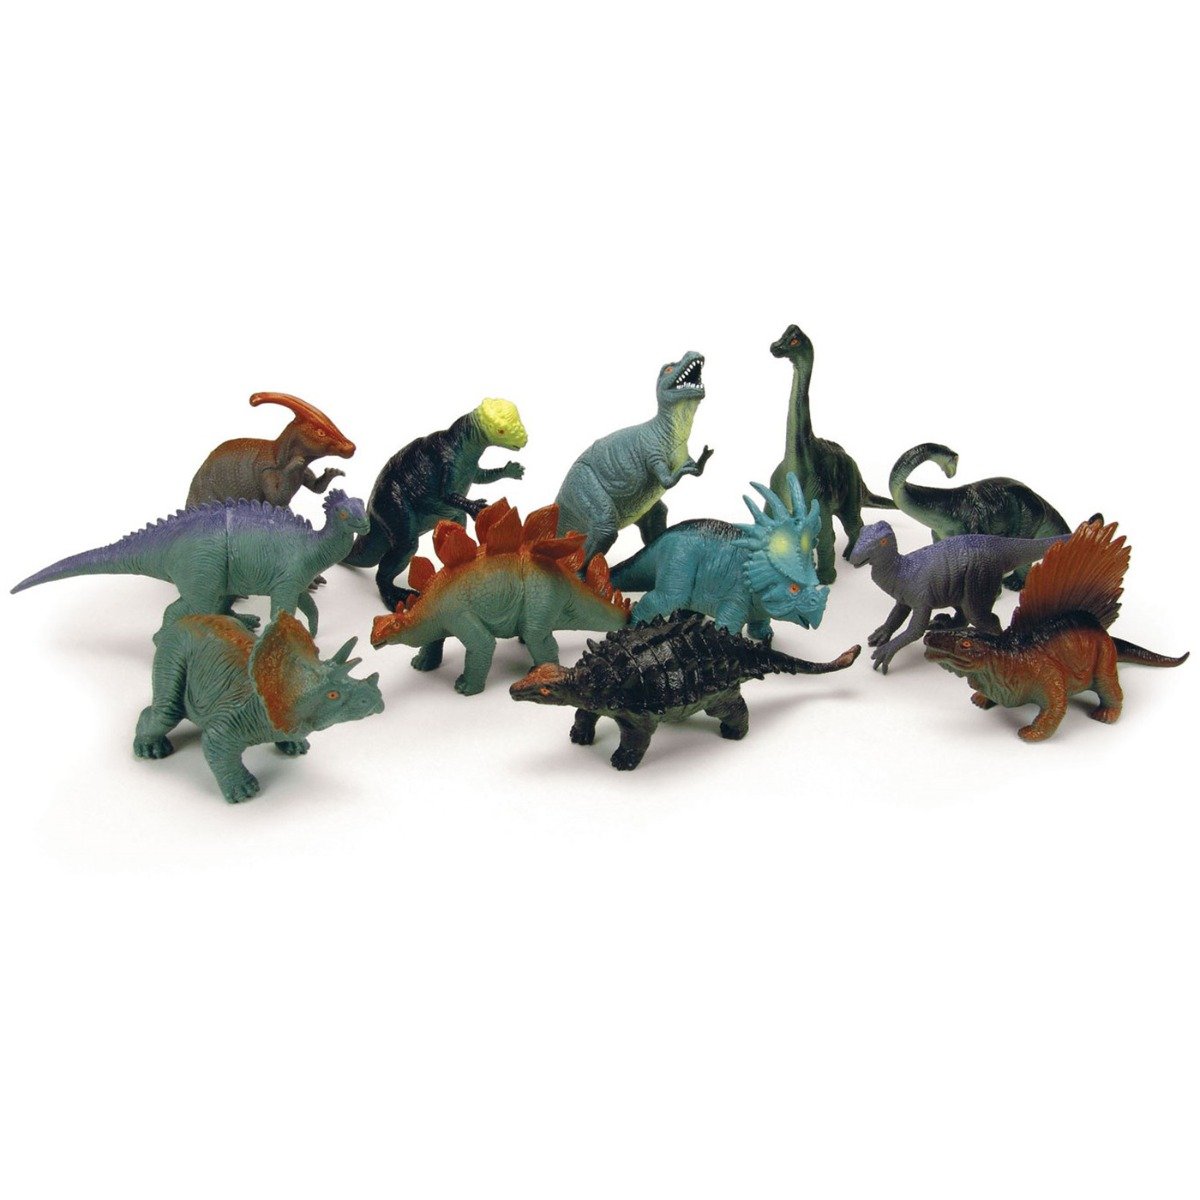 Figurina dinozaur din spuma, 20 cm Figurine 2023-09-28